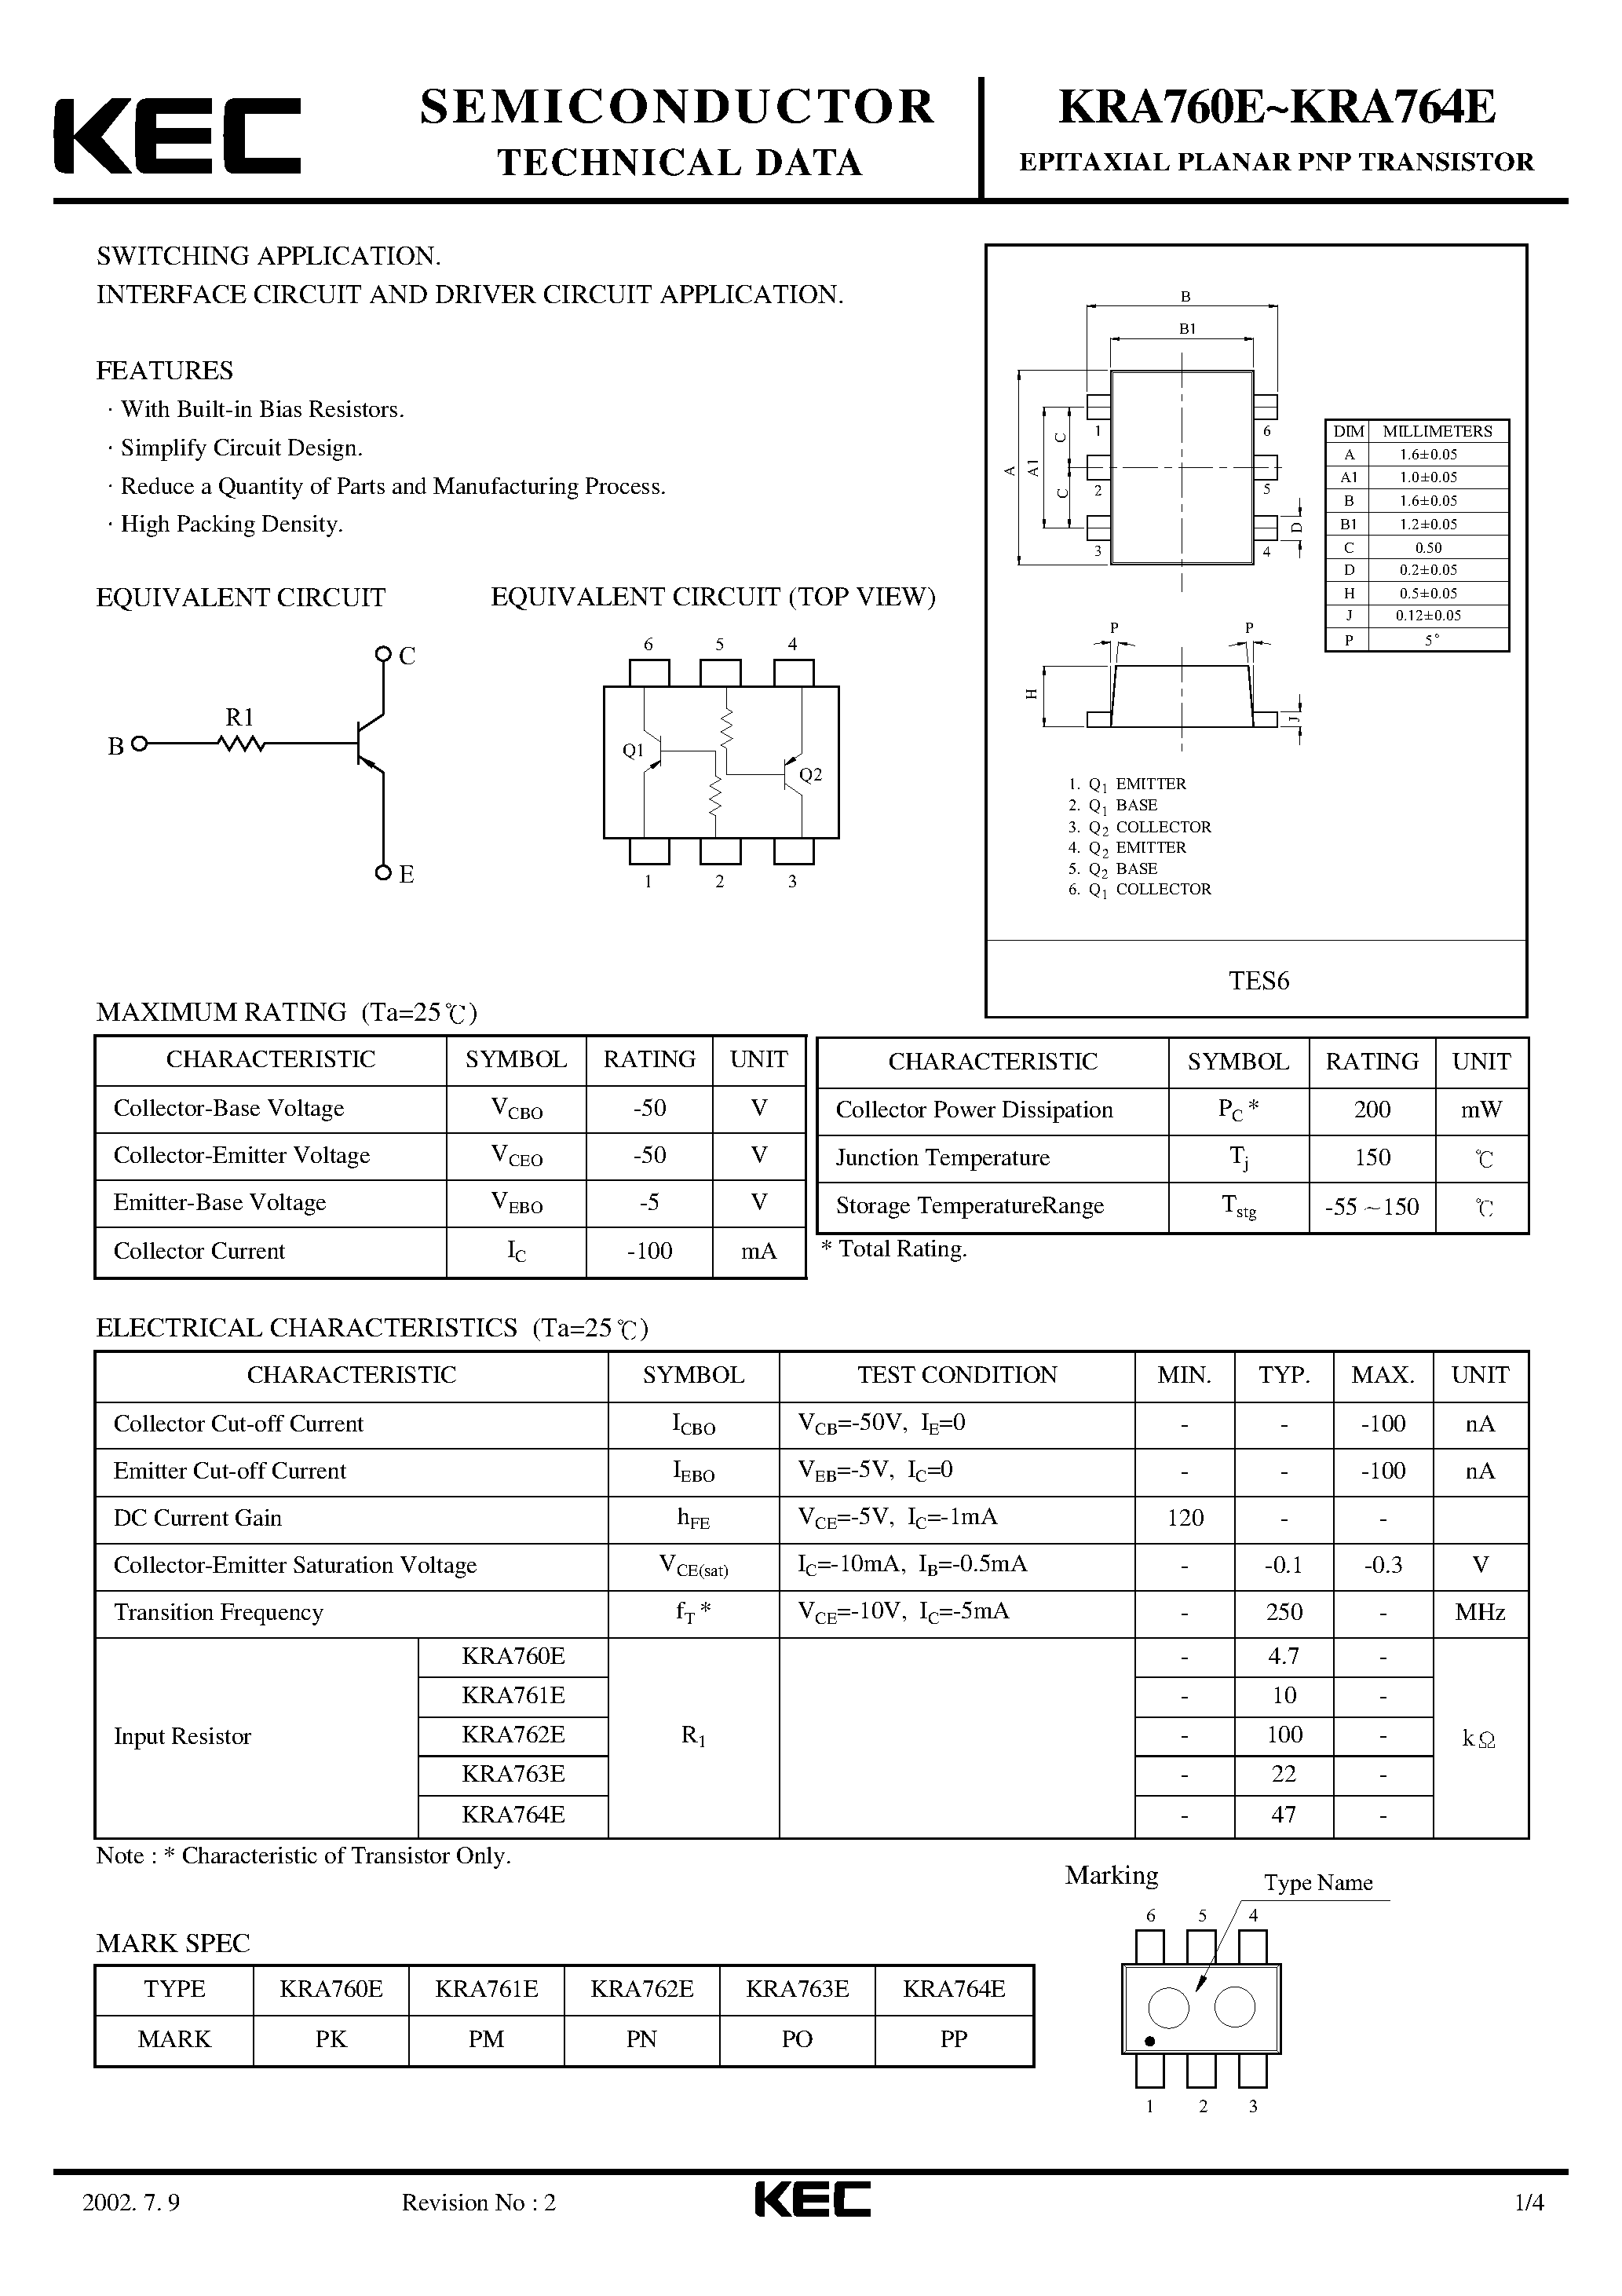 Datasheet KRA760E - (KRA760E - KRA764E) EPITAXIAL PLANAR PNP TRANSISTOR page 1